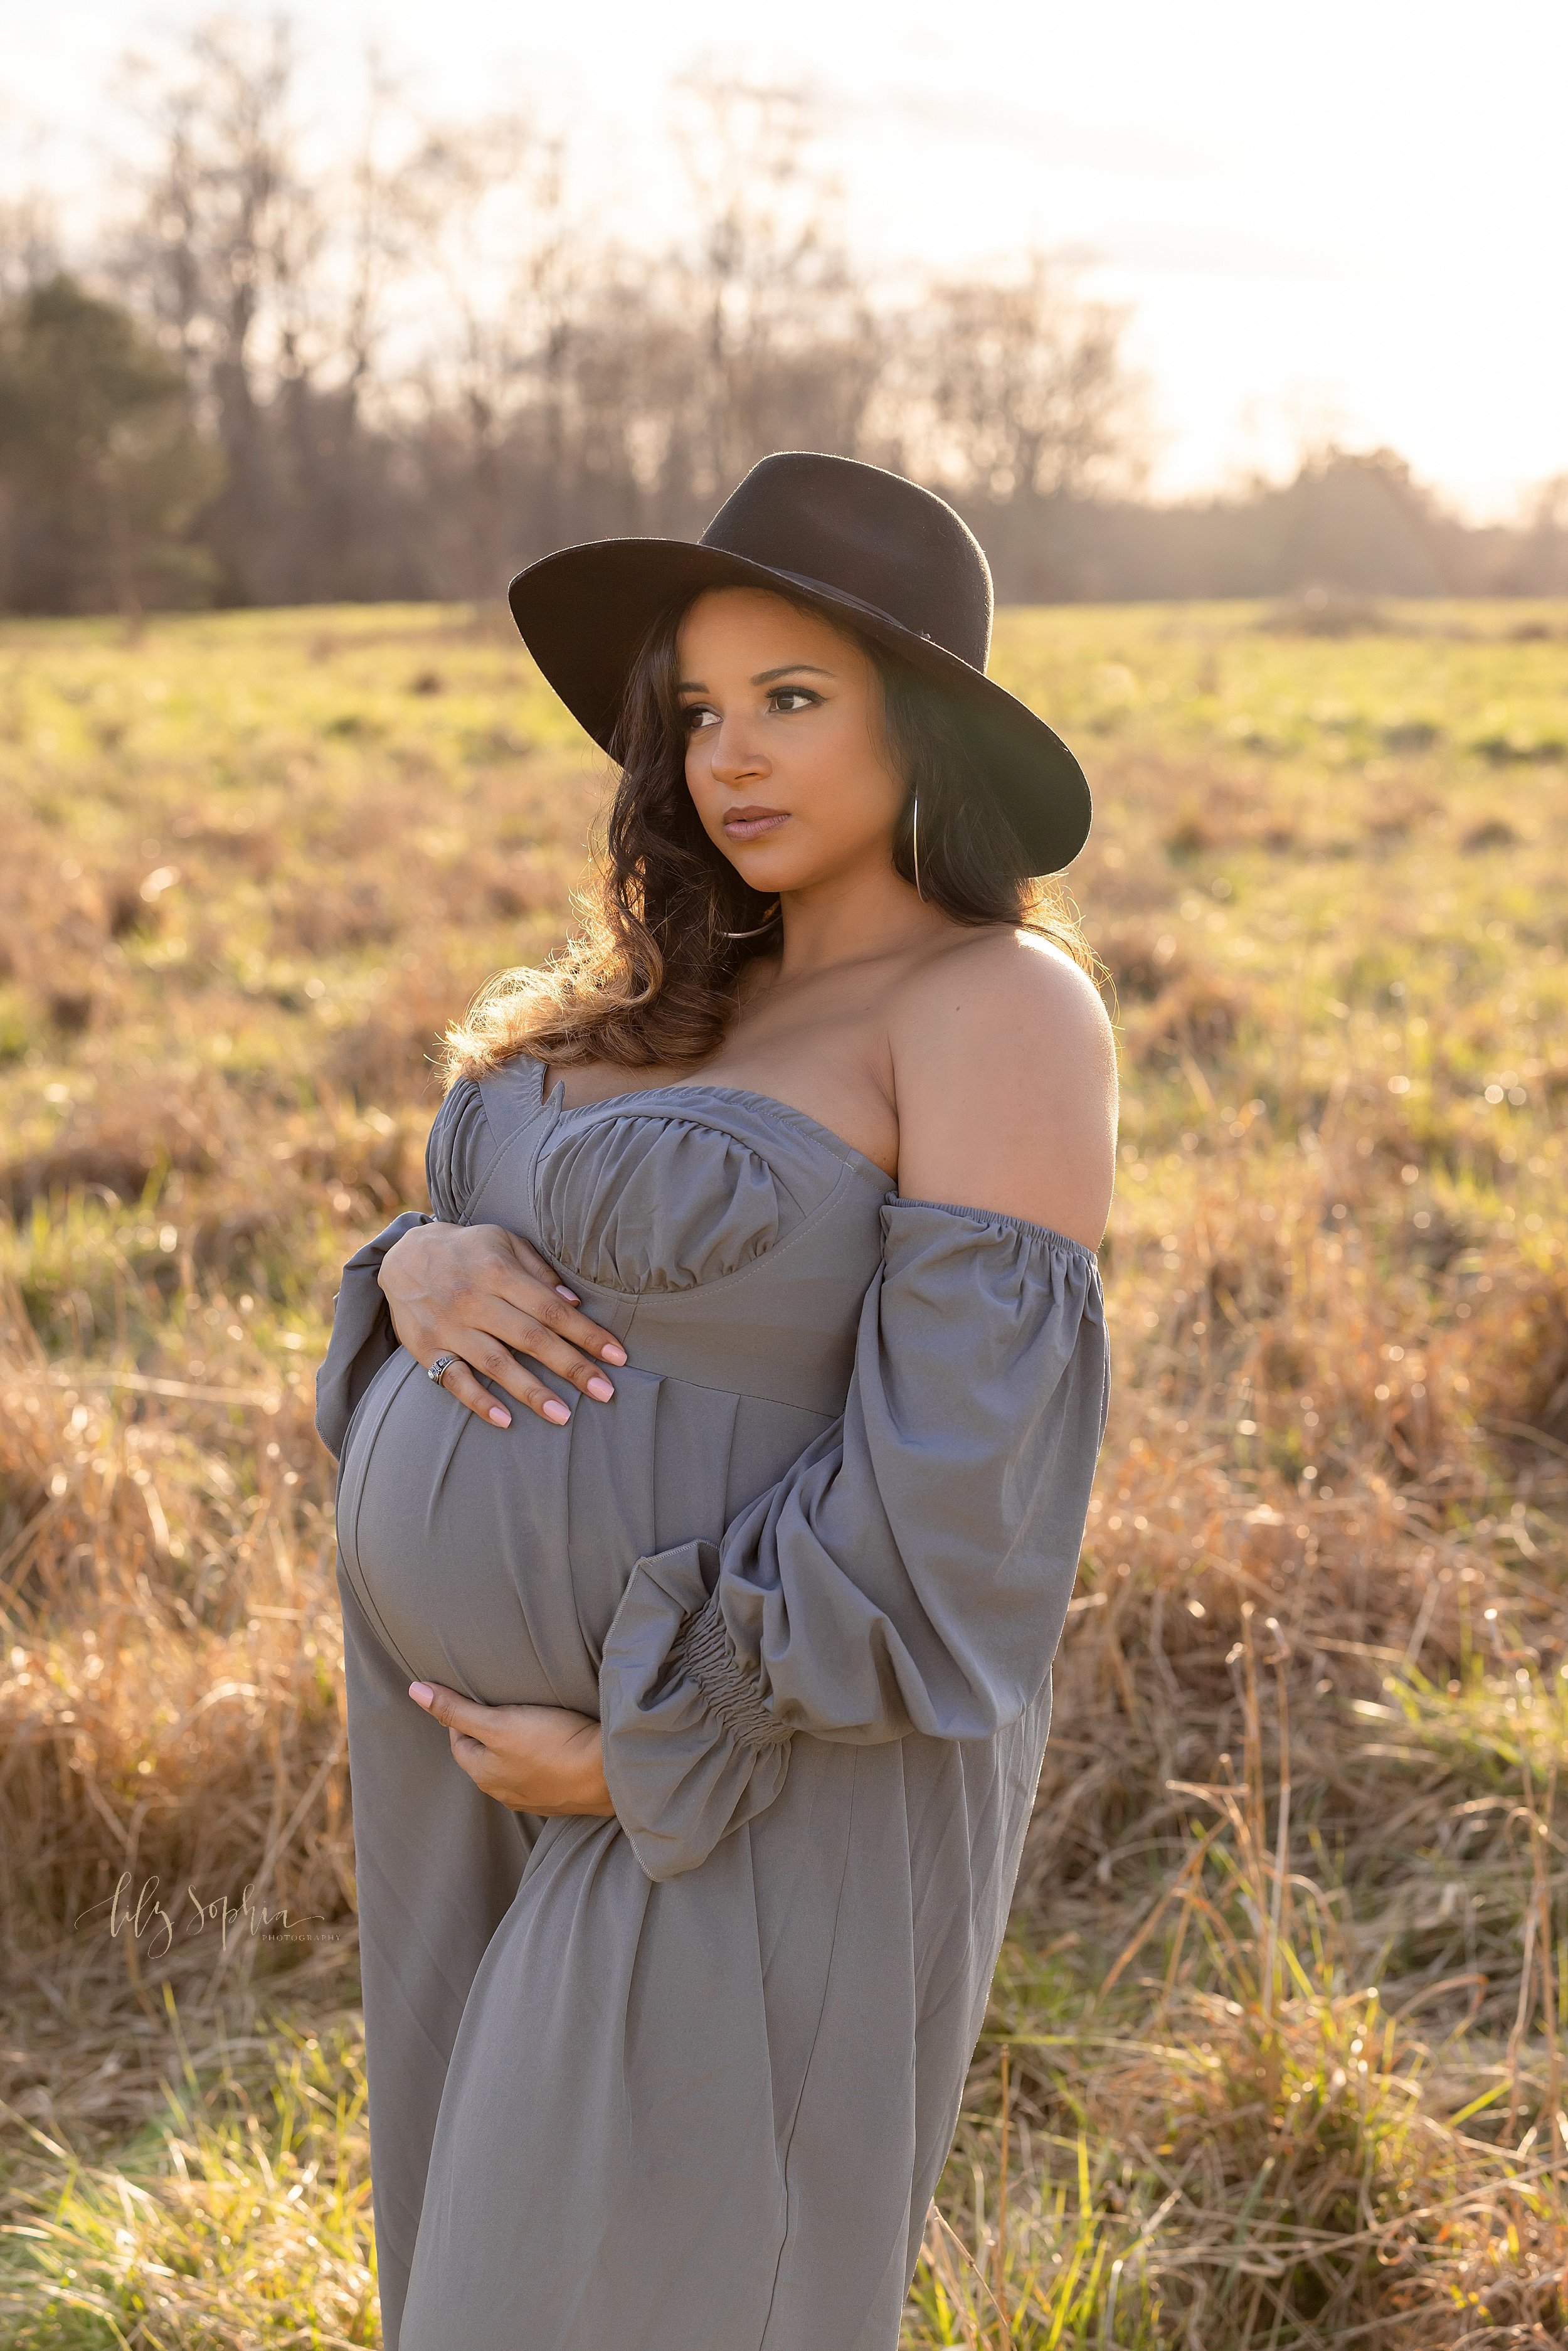 atlanta-pregnancy-photos-expecting-baby-girl-maternity-photoshoot-lawrenceville-oakhurst-decatur-kirkwood--brookhaven-buckhead-smyrna-mableton-midtown-virginia-highlands_8761.jpg